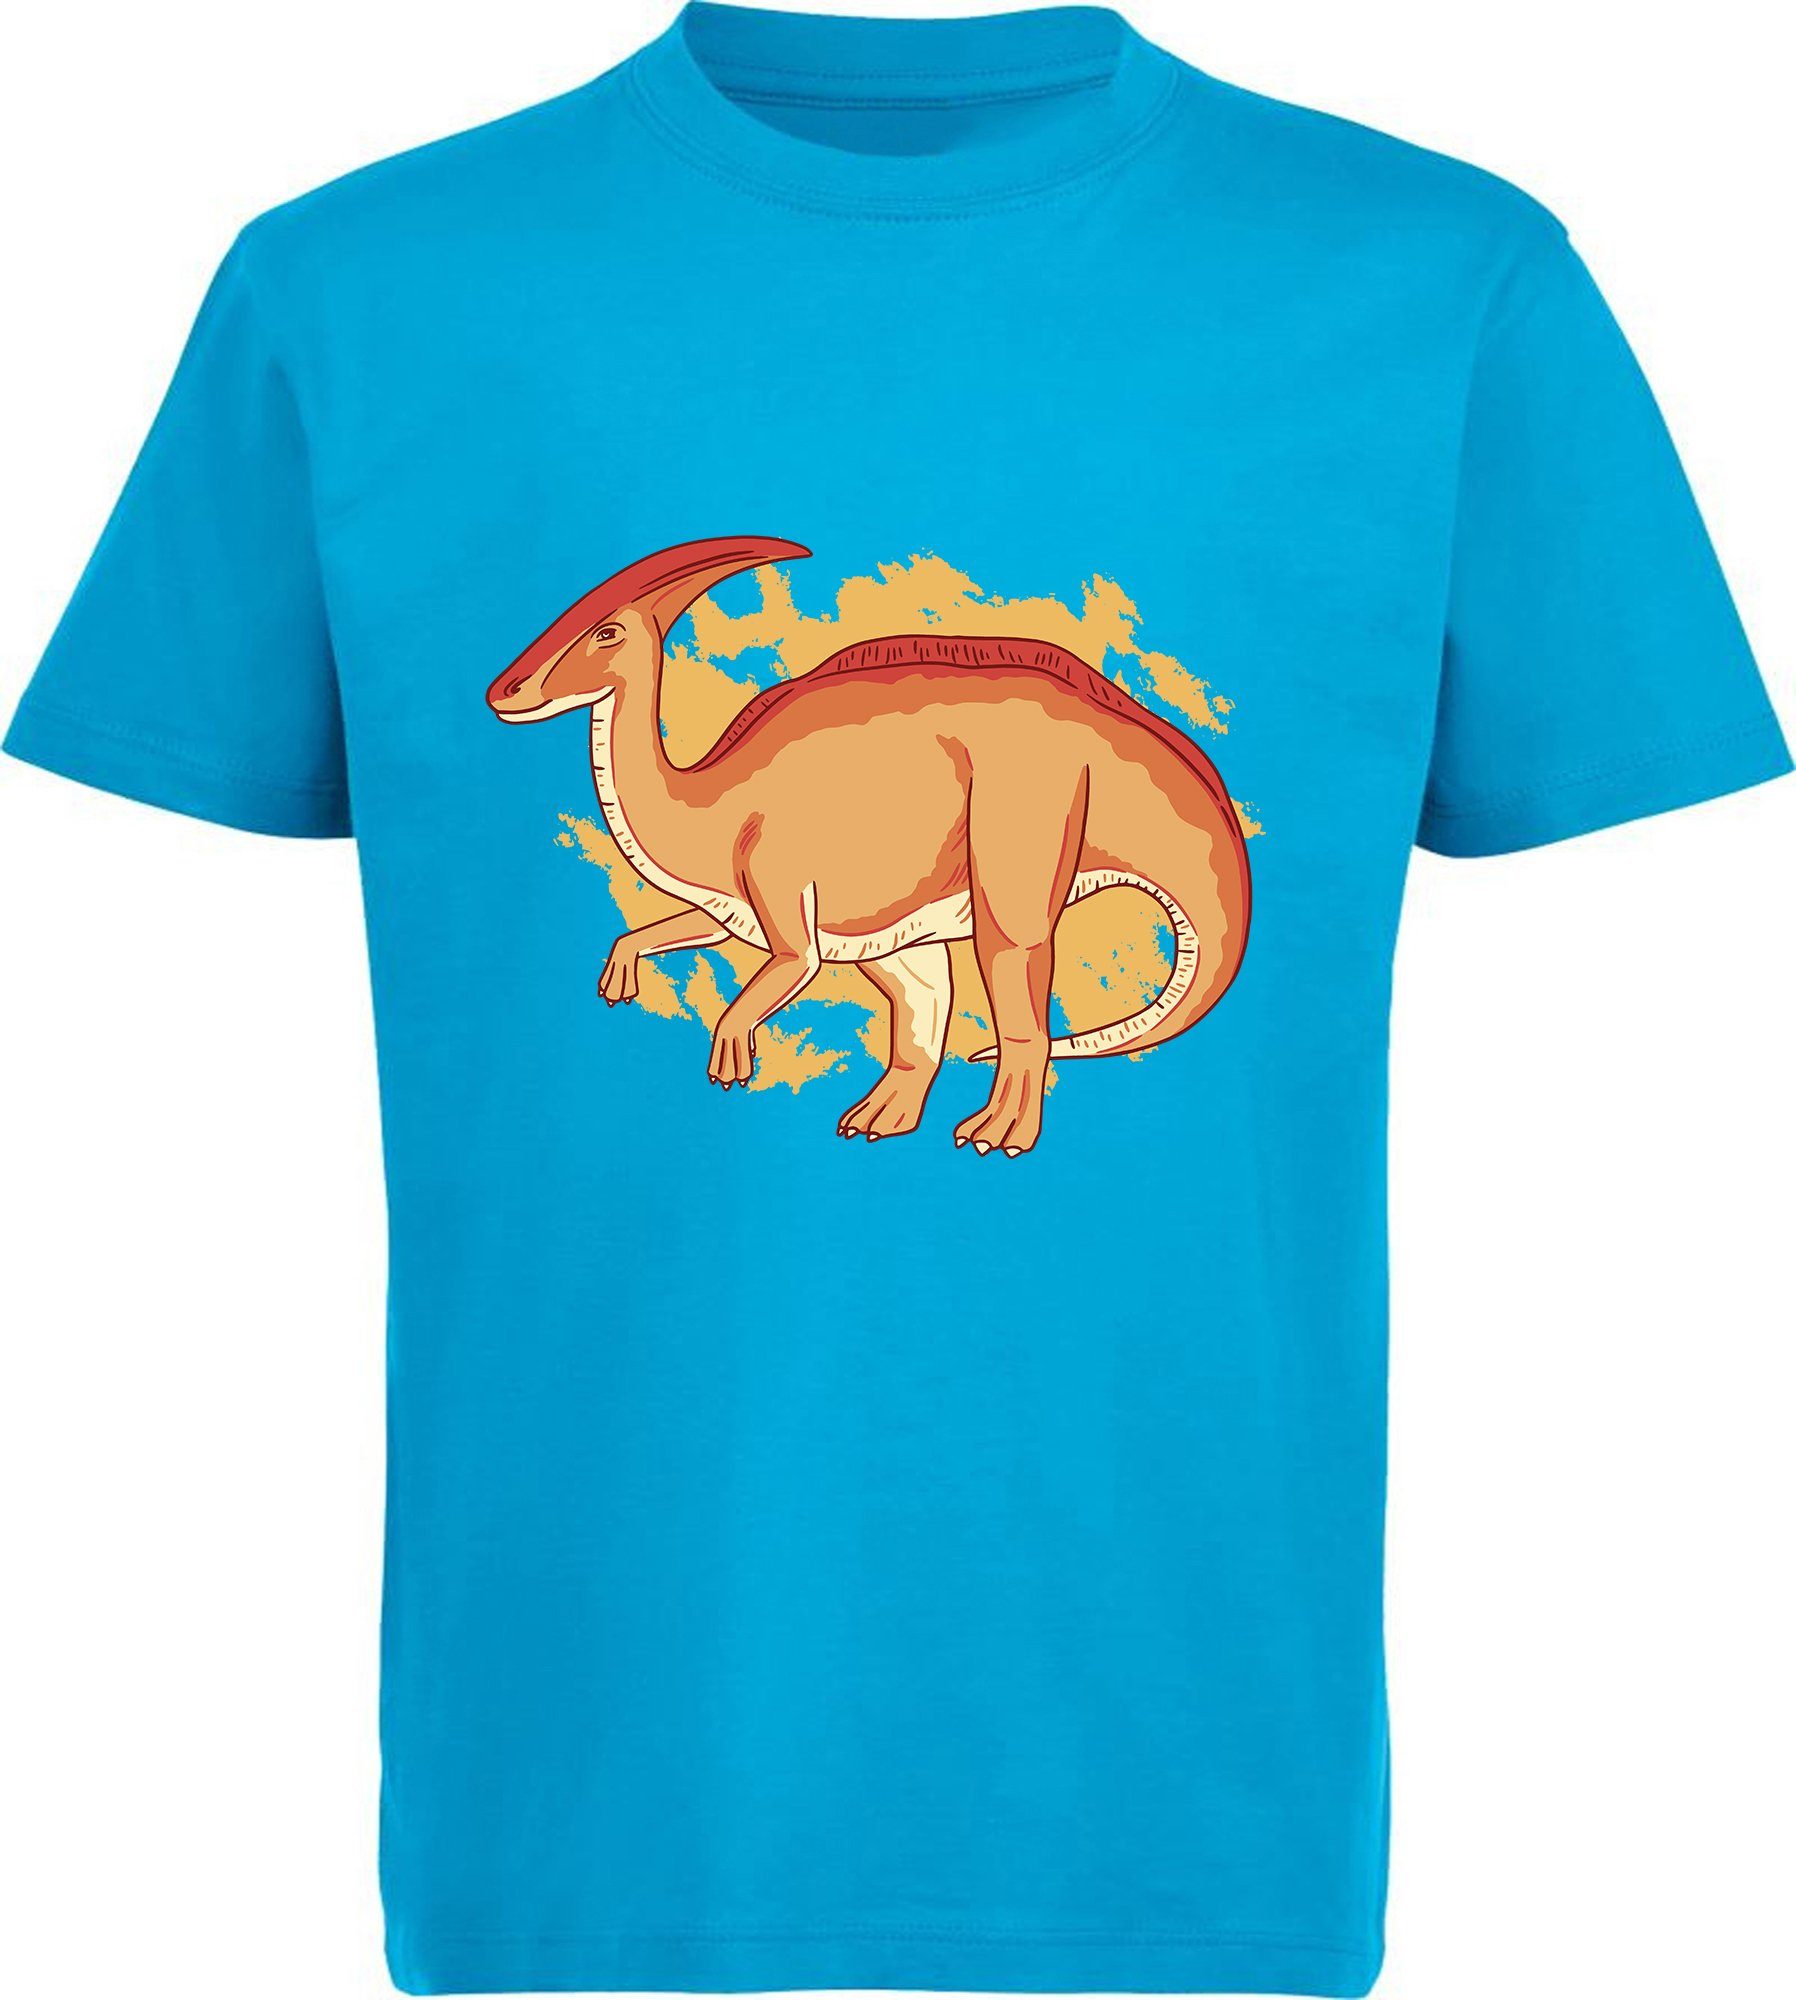 mit Print-Shirt weiß, MyDesign24 Dino, bedrucktes blau rot, Kinder aqua blau, T-Shirt i86 Parasaurolophus schwarz, mit Baumwollshirt